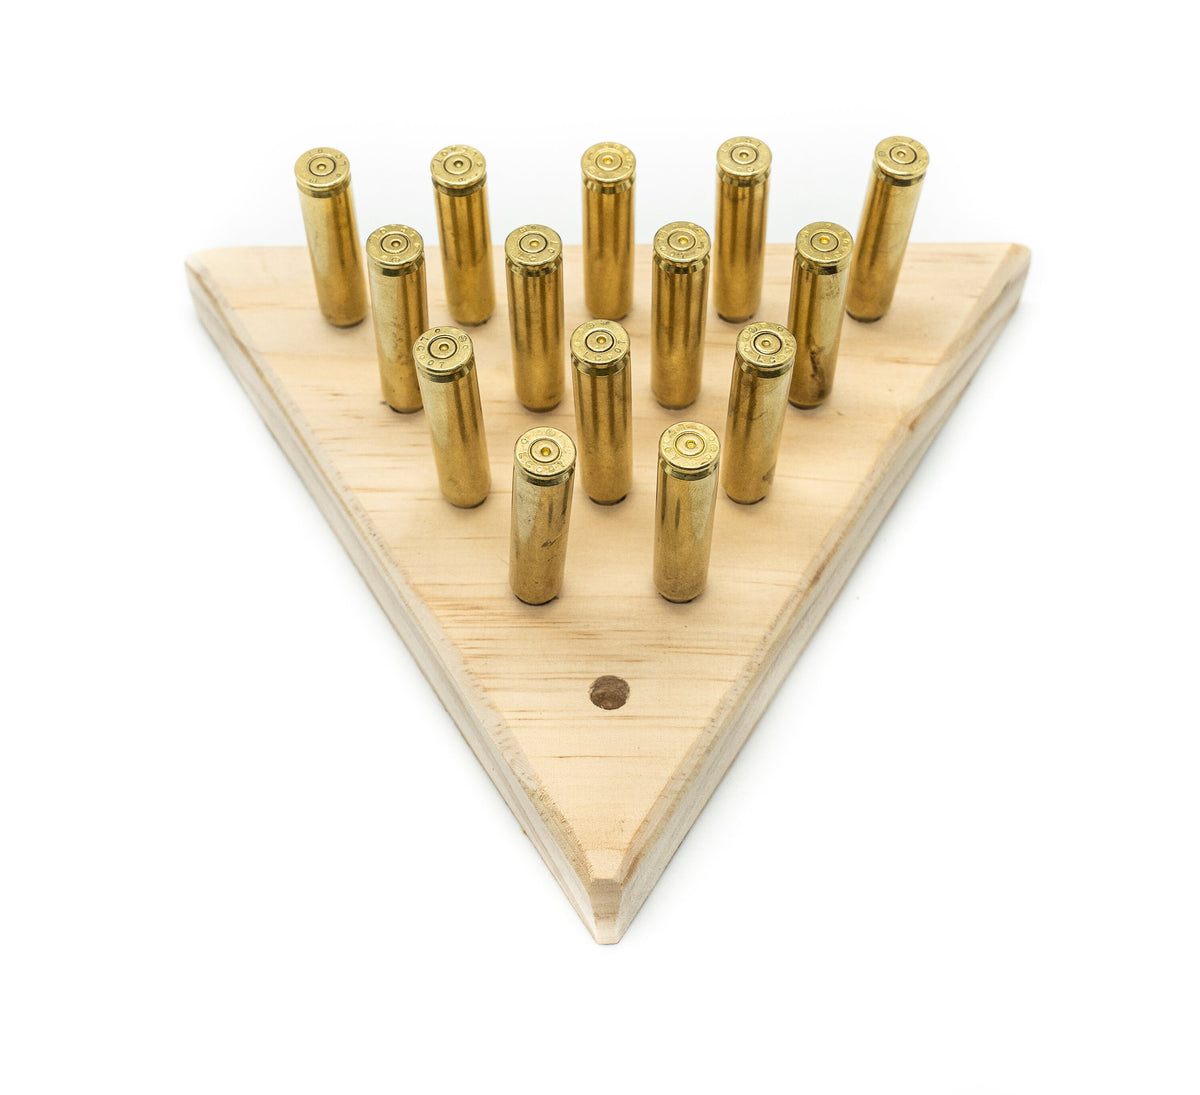 Tricky Triangle - Peg Solitaire - Bullet Peg Wooden Kids Game Puzzle - Cracker Barrel Board Game - Wood Jumping Peg Game - Deer Hunter Gift